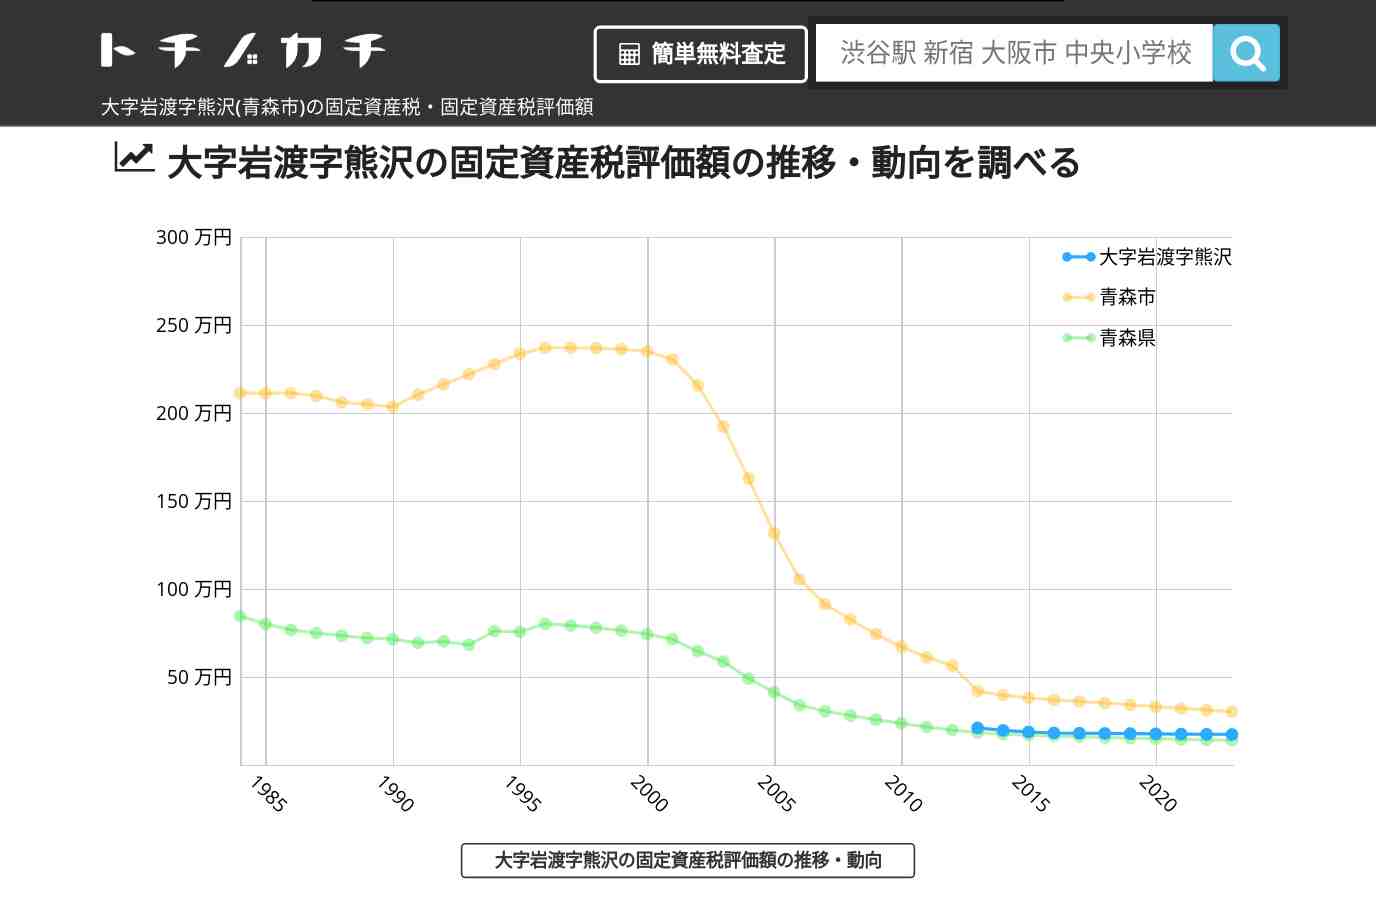 大字岩渡字熊沢(青森市)の固定資産税・固定資産税評価額 | トチノカチ